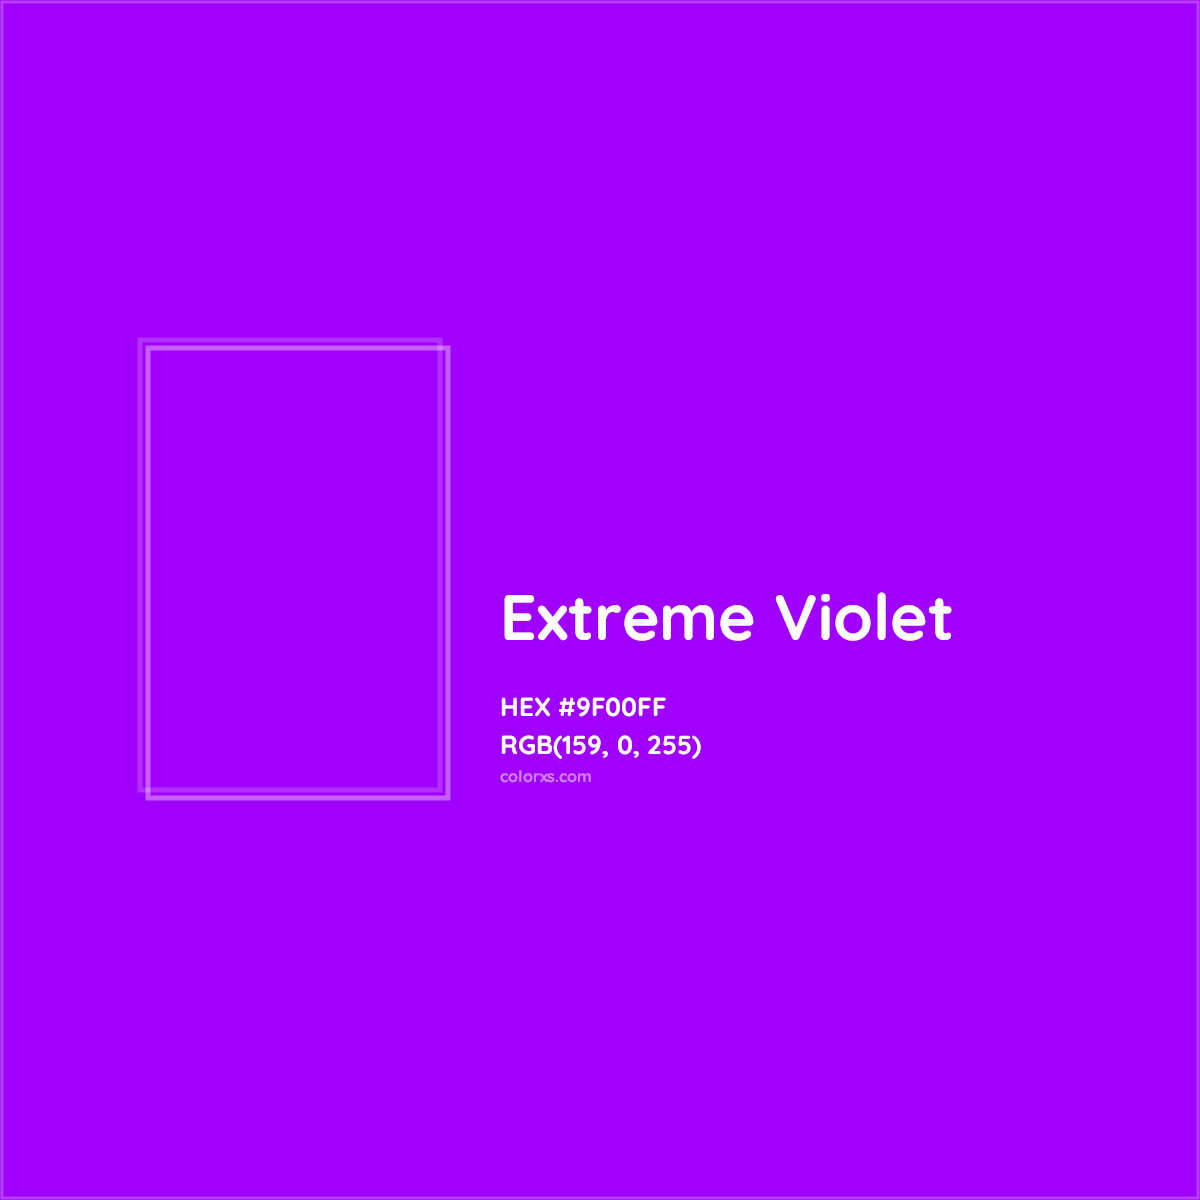 HEX #9F00FF Extreme Violet Color - Color Code